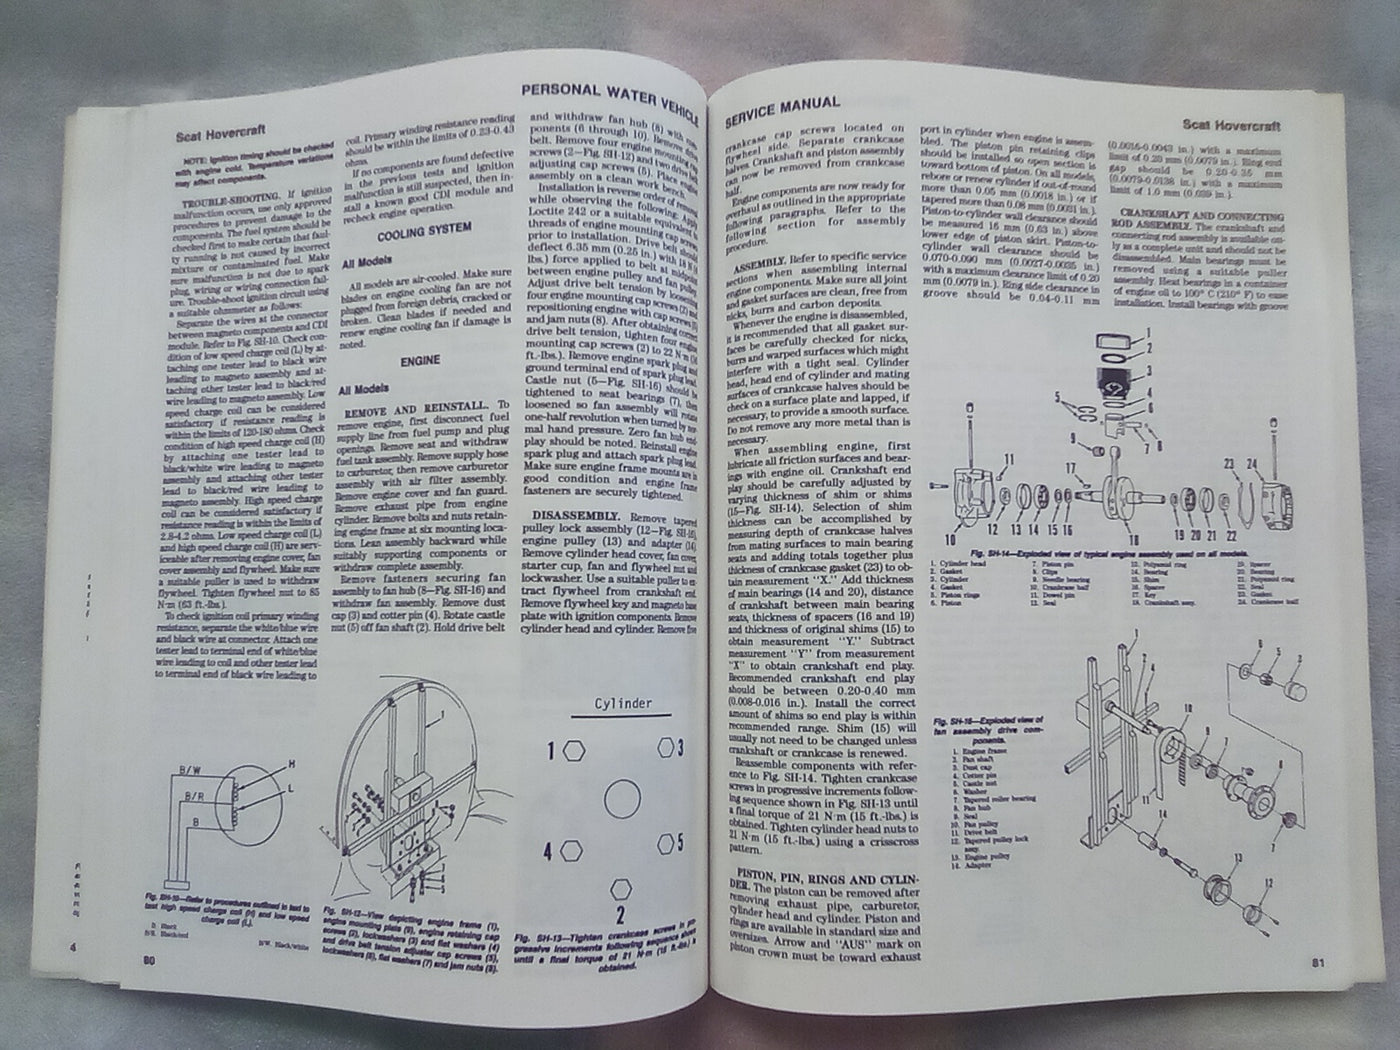 Service Manual Fazer, Yamaha, Wetjet, Jet Ski, etc..  1978-1988 Various Models